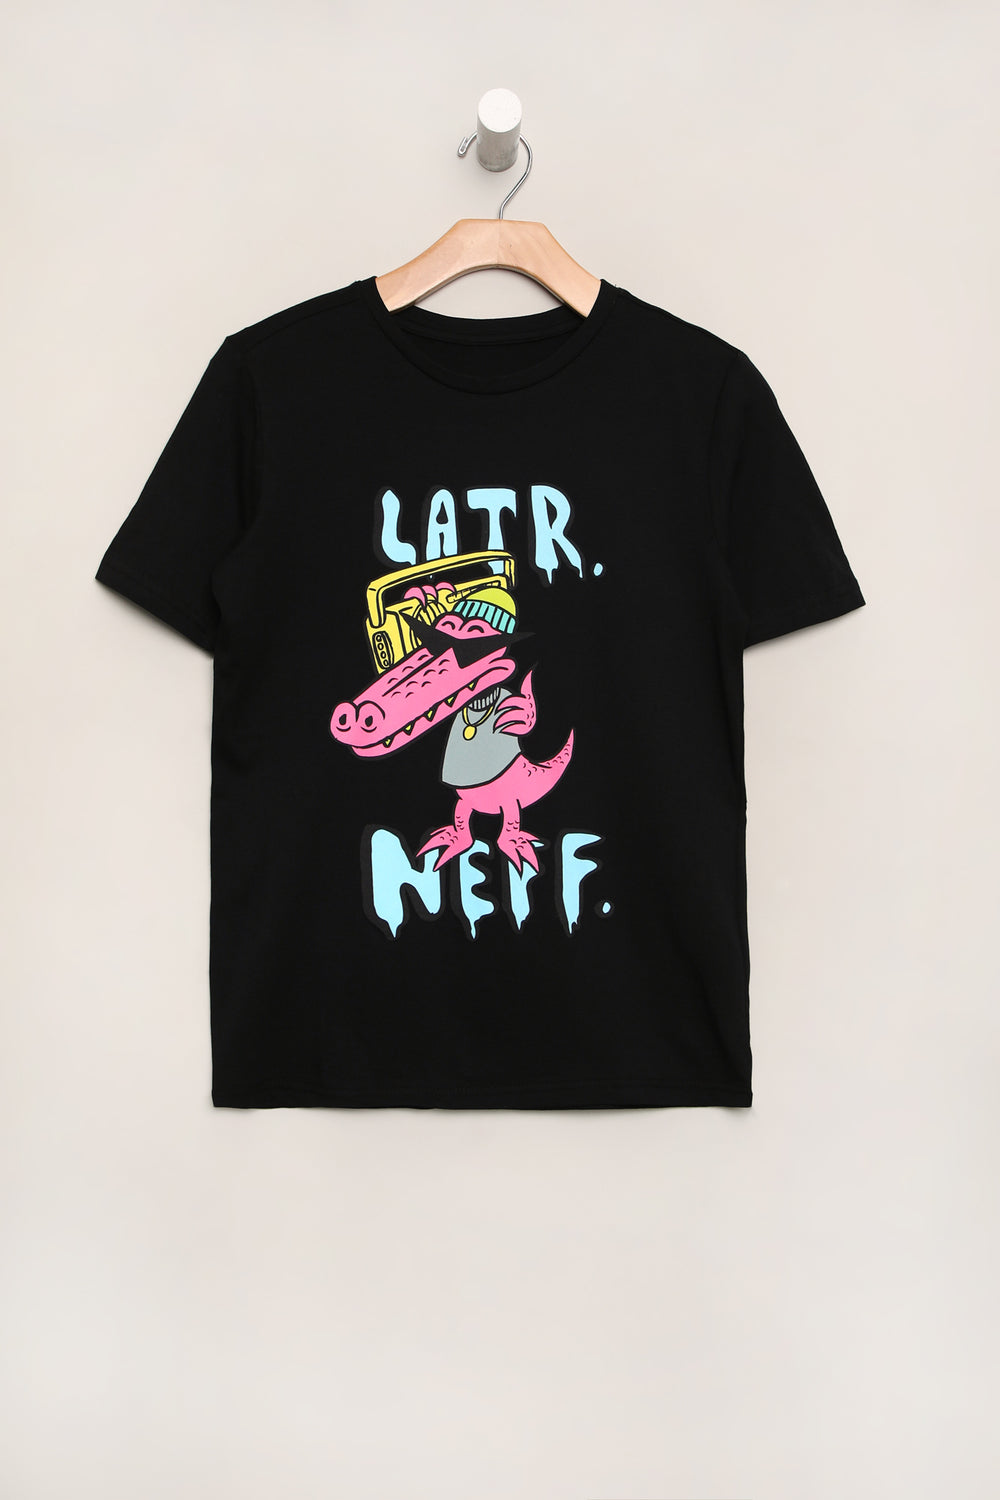 Youth Neff Latr. Gator T-Shirt Youth Neff Latr. Gator T-Shirt